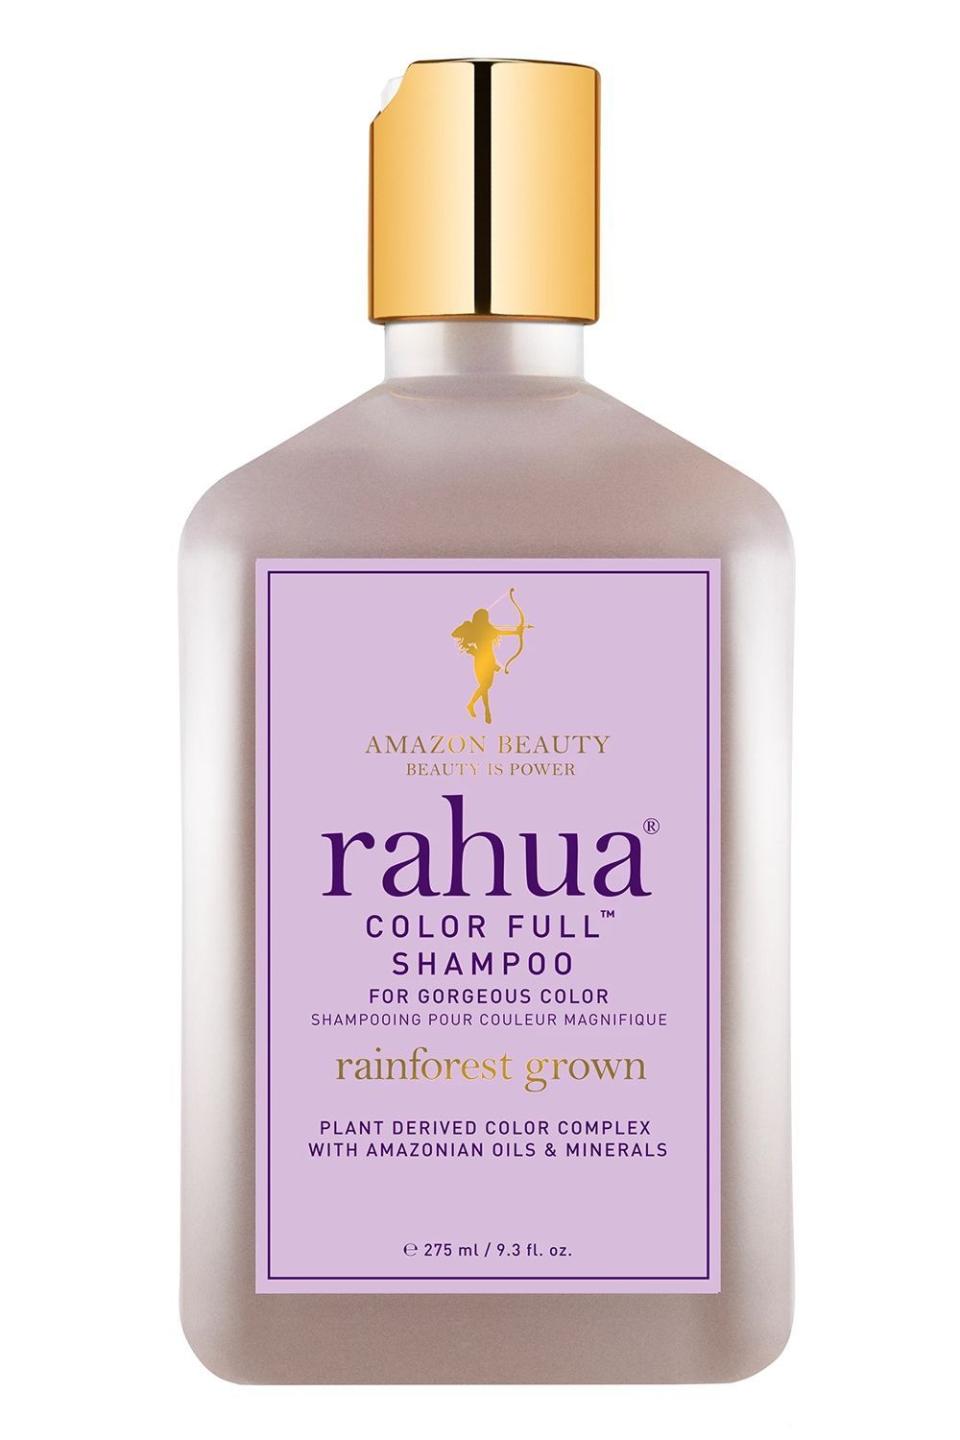 1) Rahua Color Full Shampoo